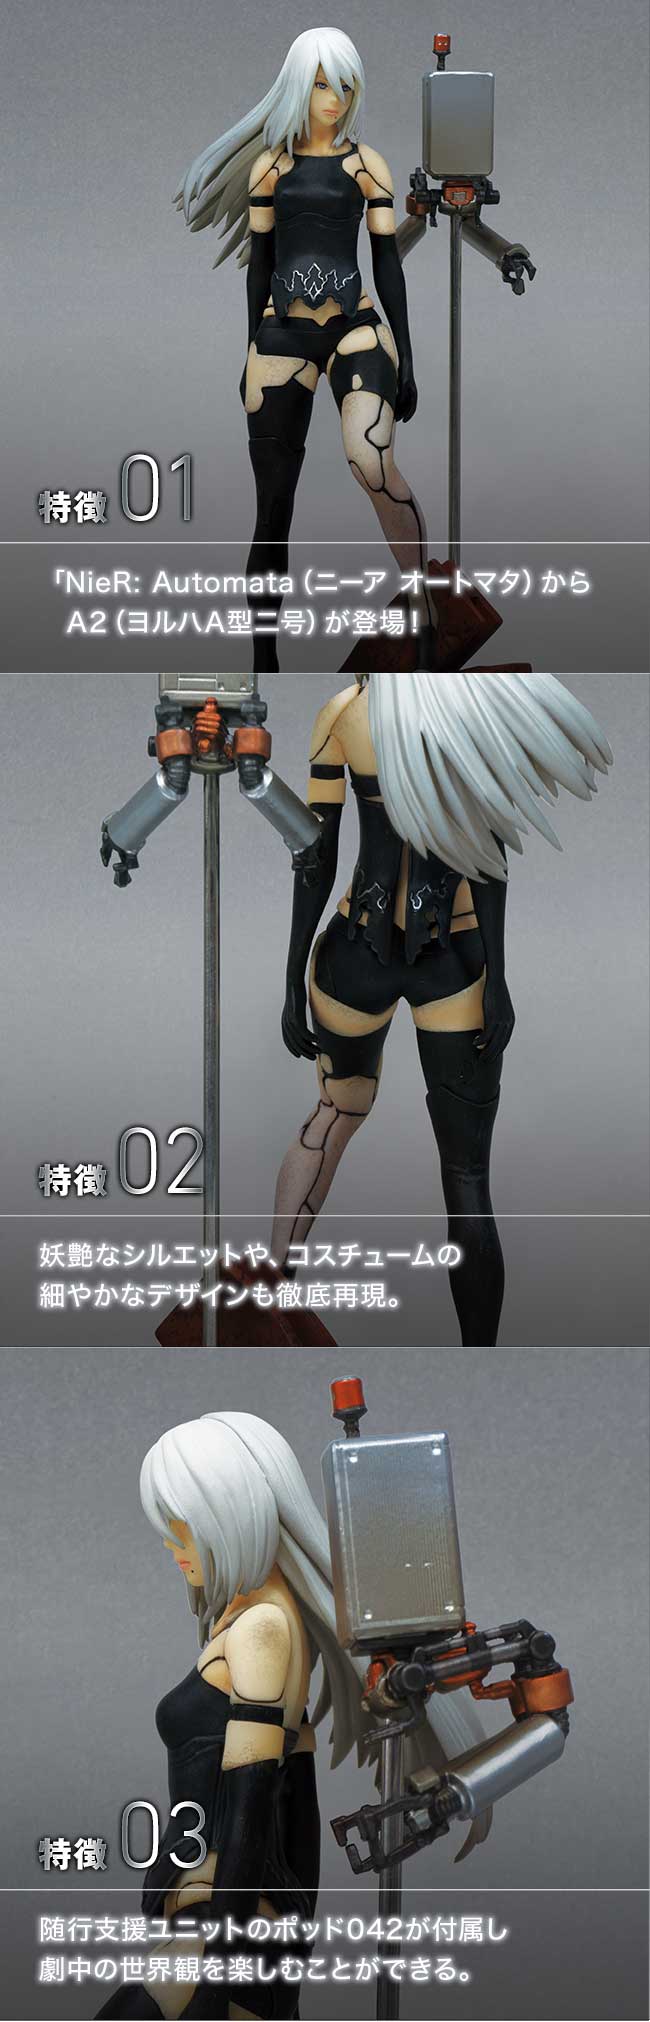 Nier Automata Character Figure ヨルハ A型二号 Square Enix